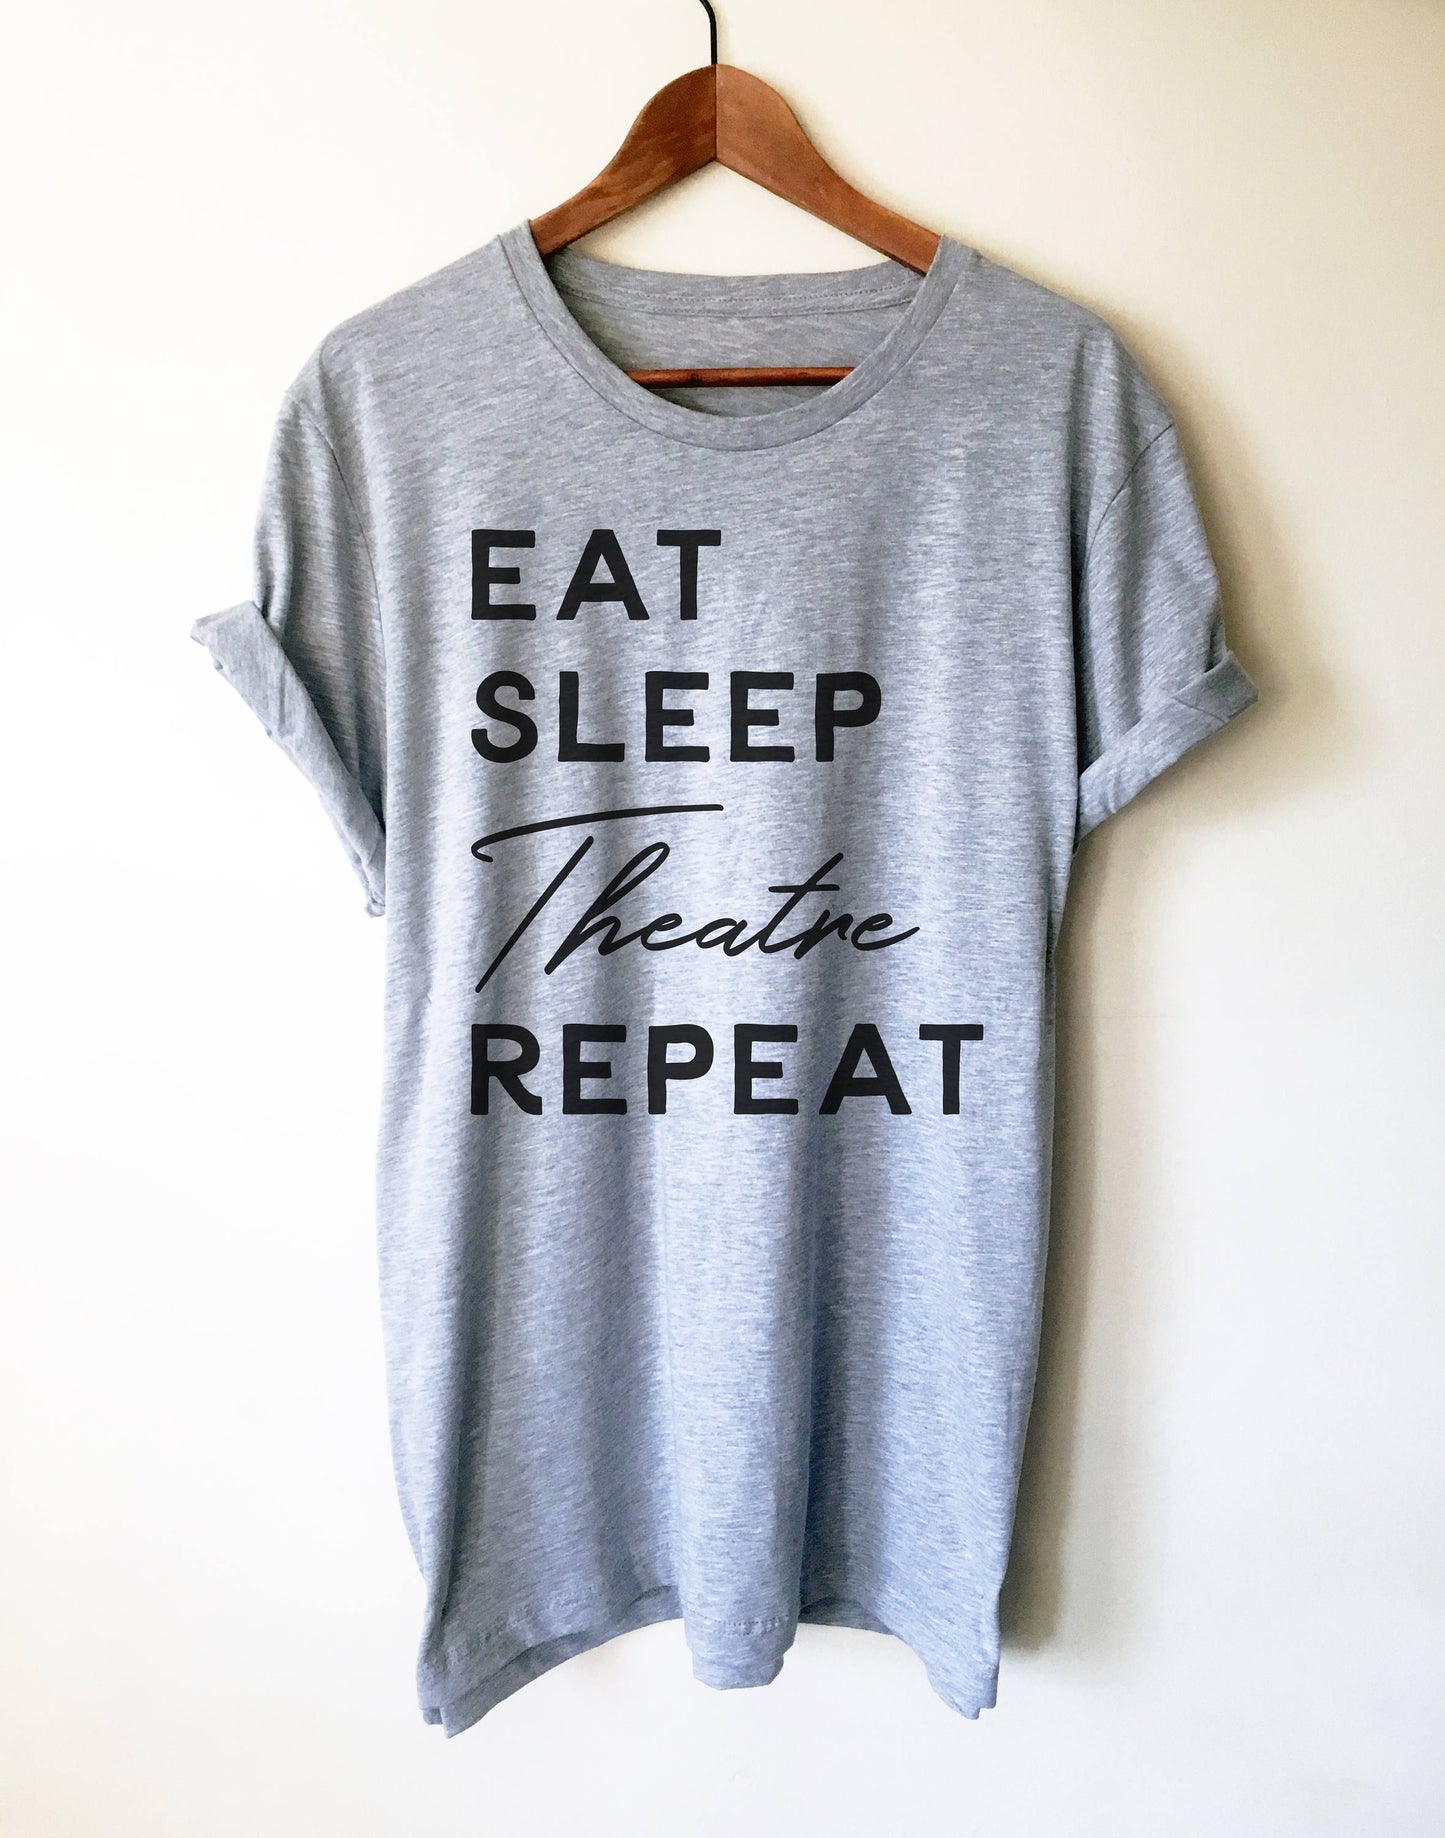 Eat Sleep Theatre Repeat Unisex Shirt - Theatre Shirt - Theatre gift - Broadway shirt - Actor shirt - Drama shirt - Actress shirt